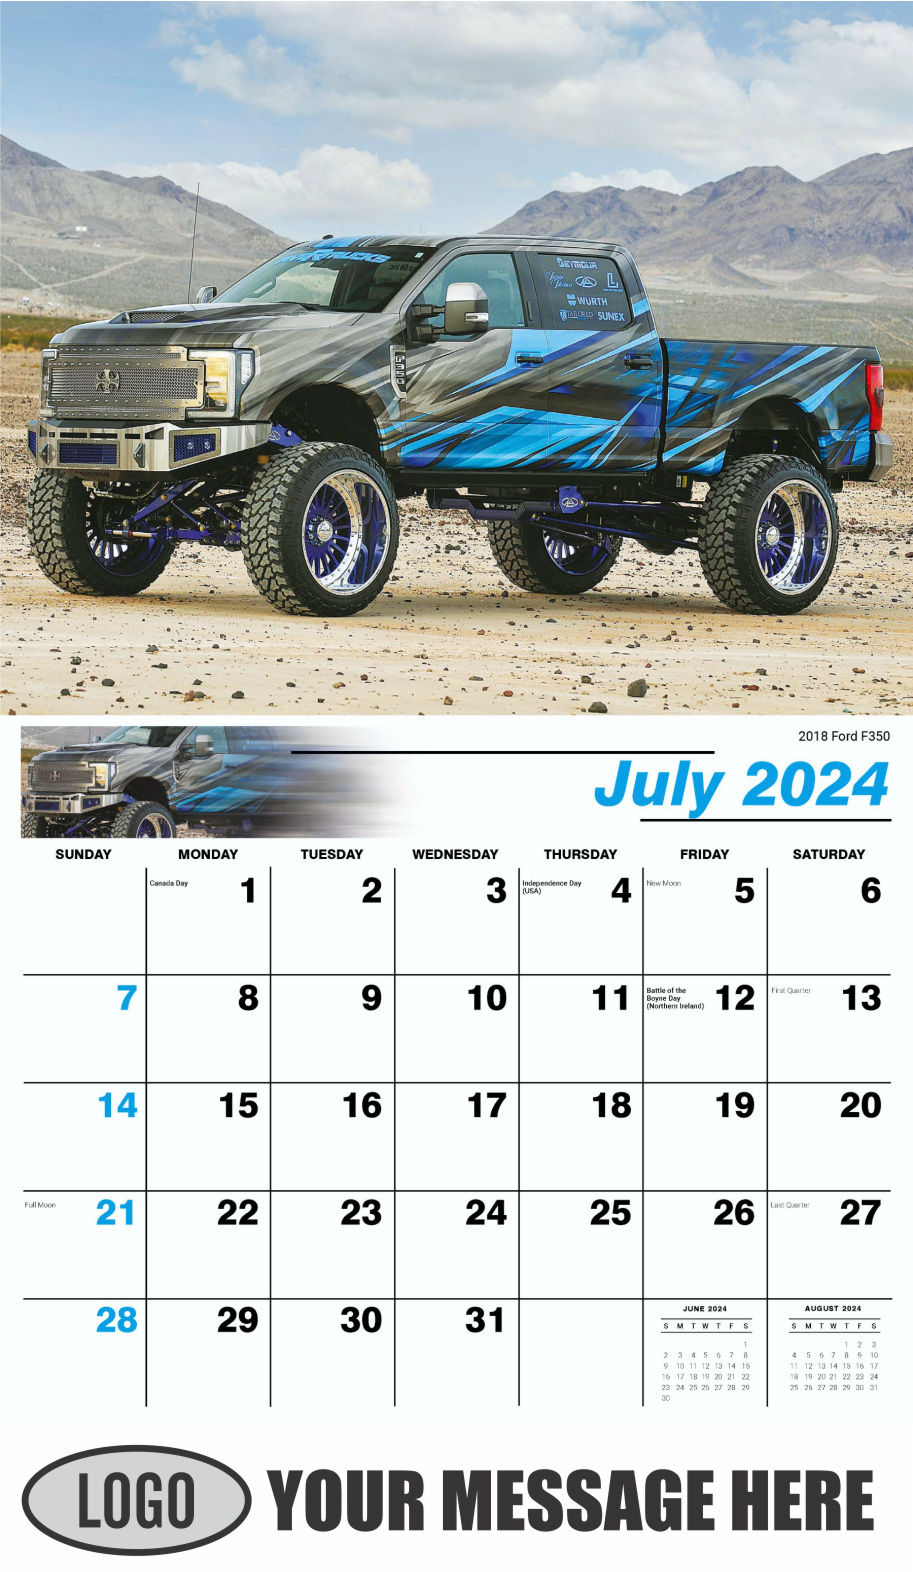 Pumped-Up Pickups 2024 Automotive Business Promo Calendar - July